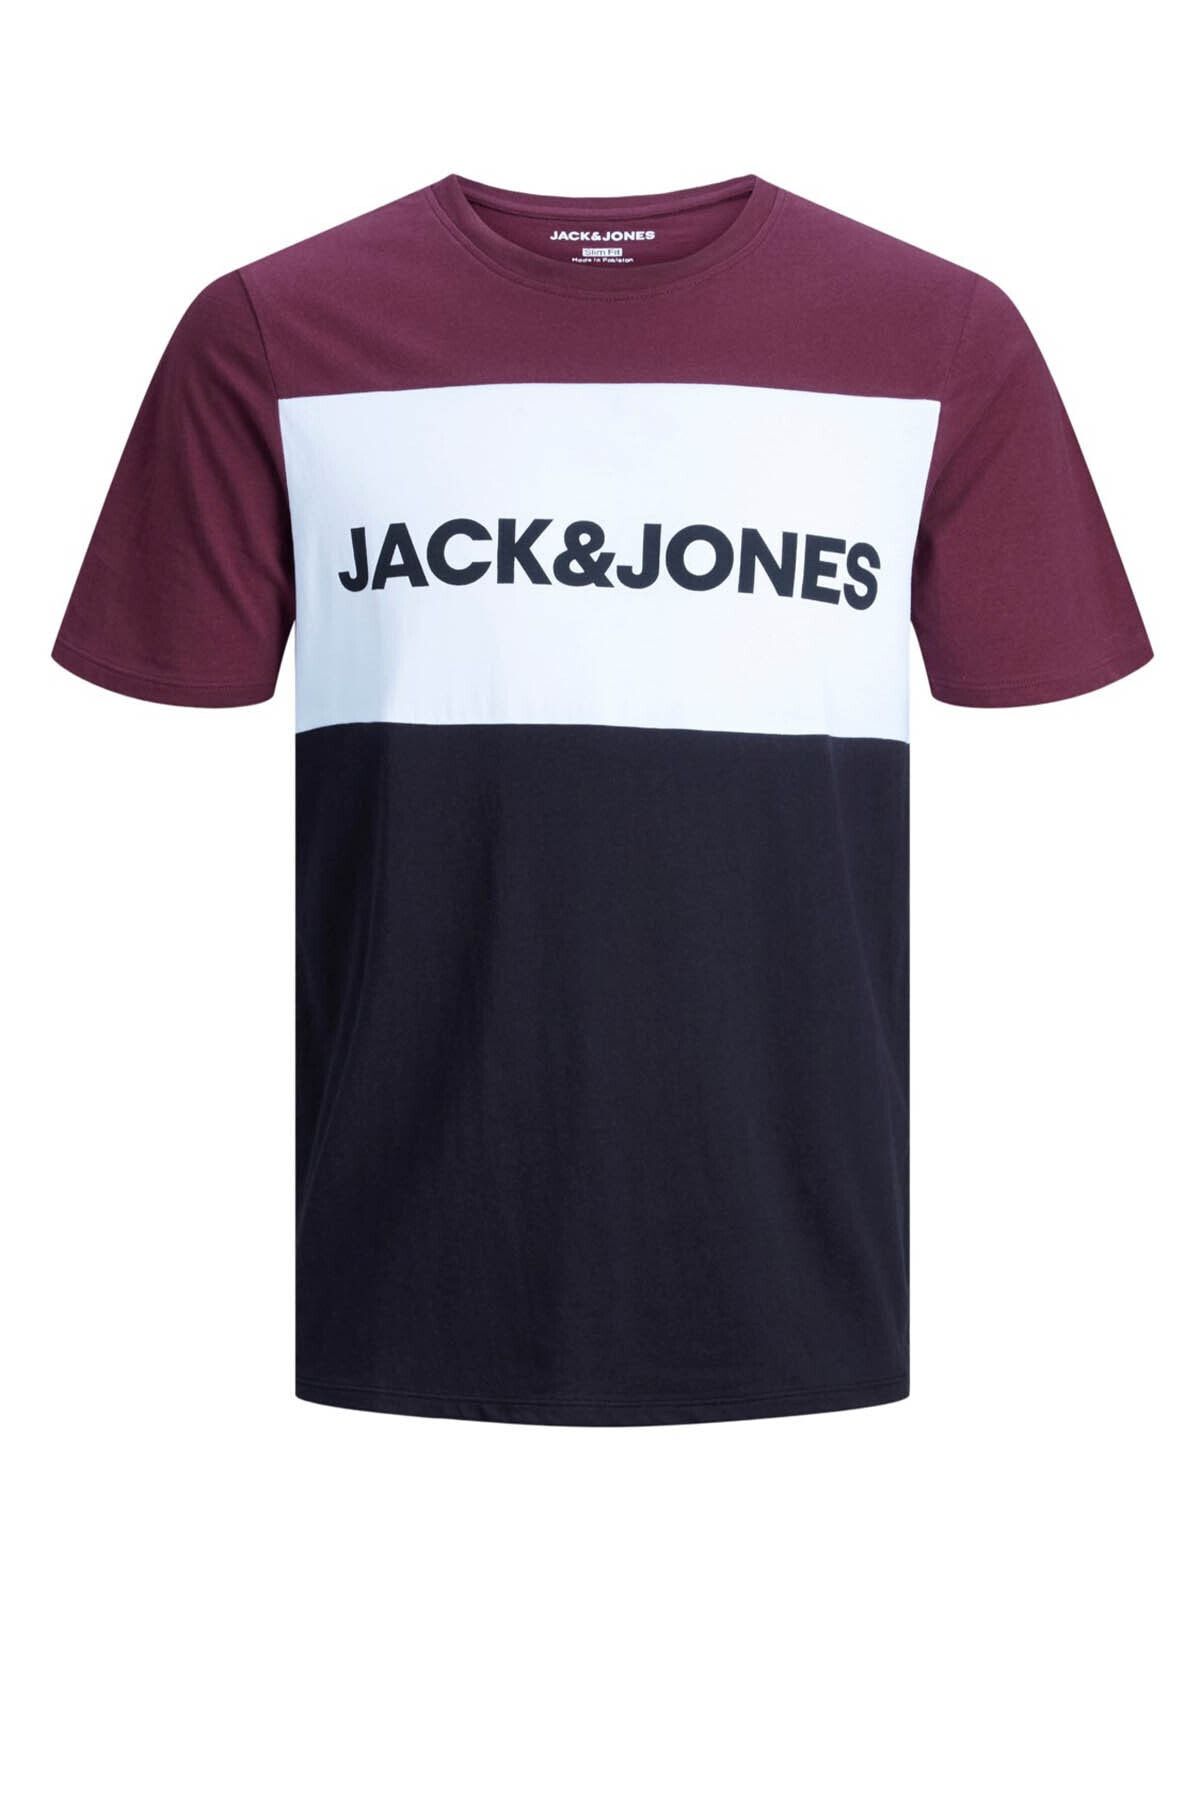 Jack & Jones Erkek Bordo T-shirt - 12173968